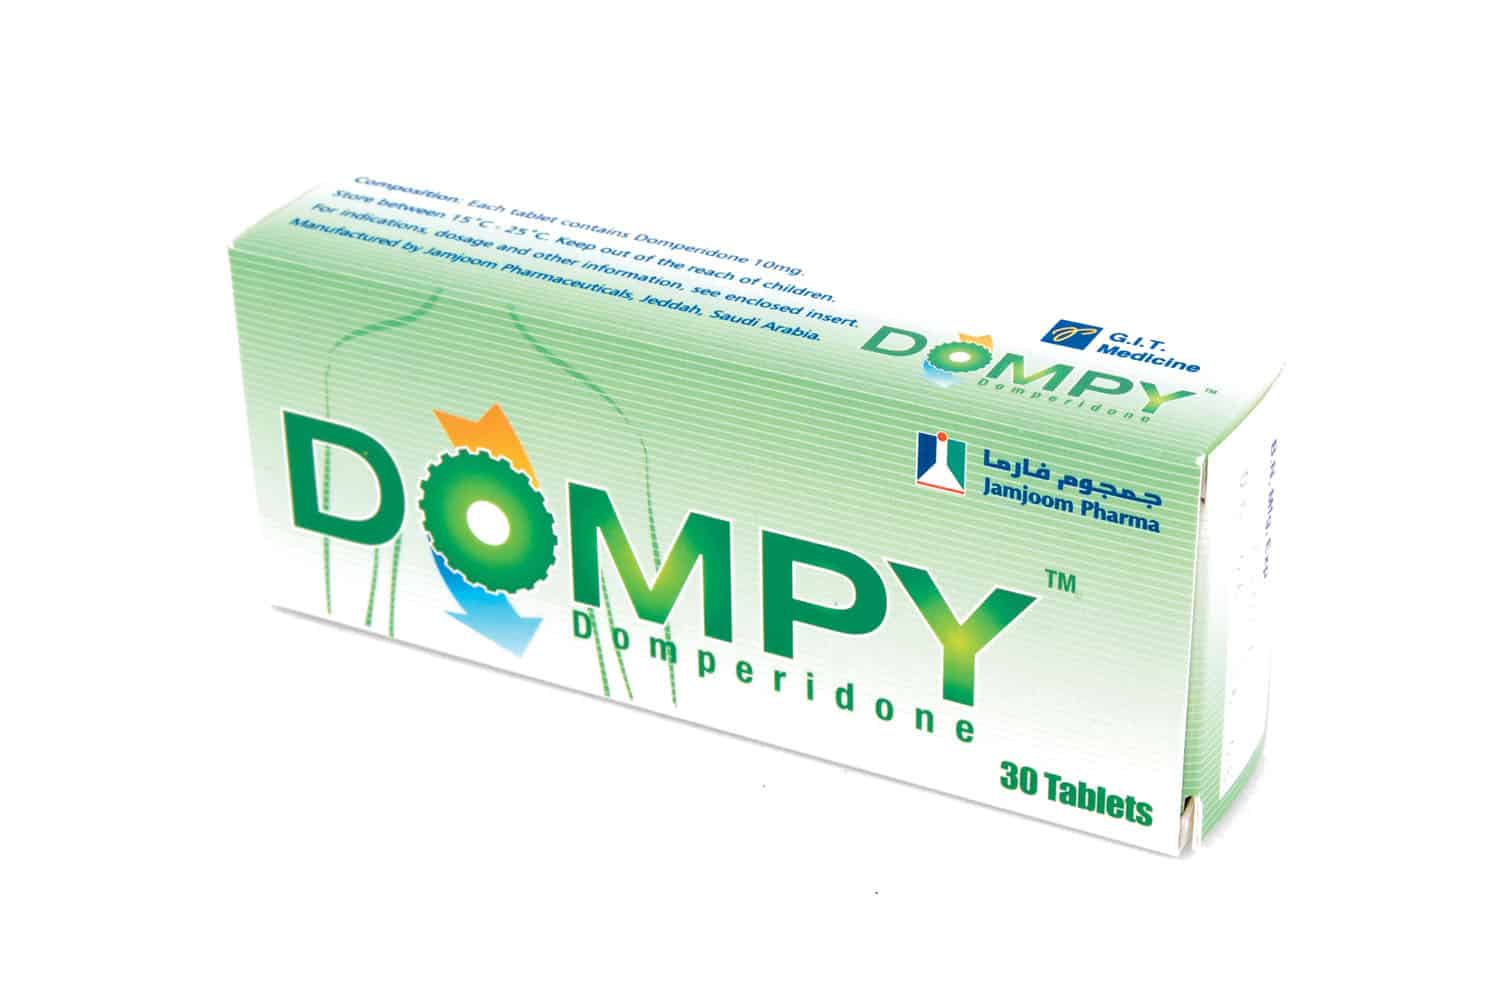 Dompy - image 0